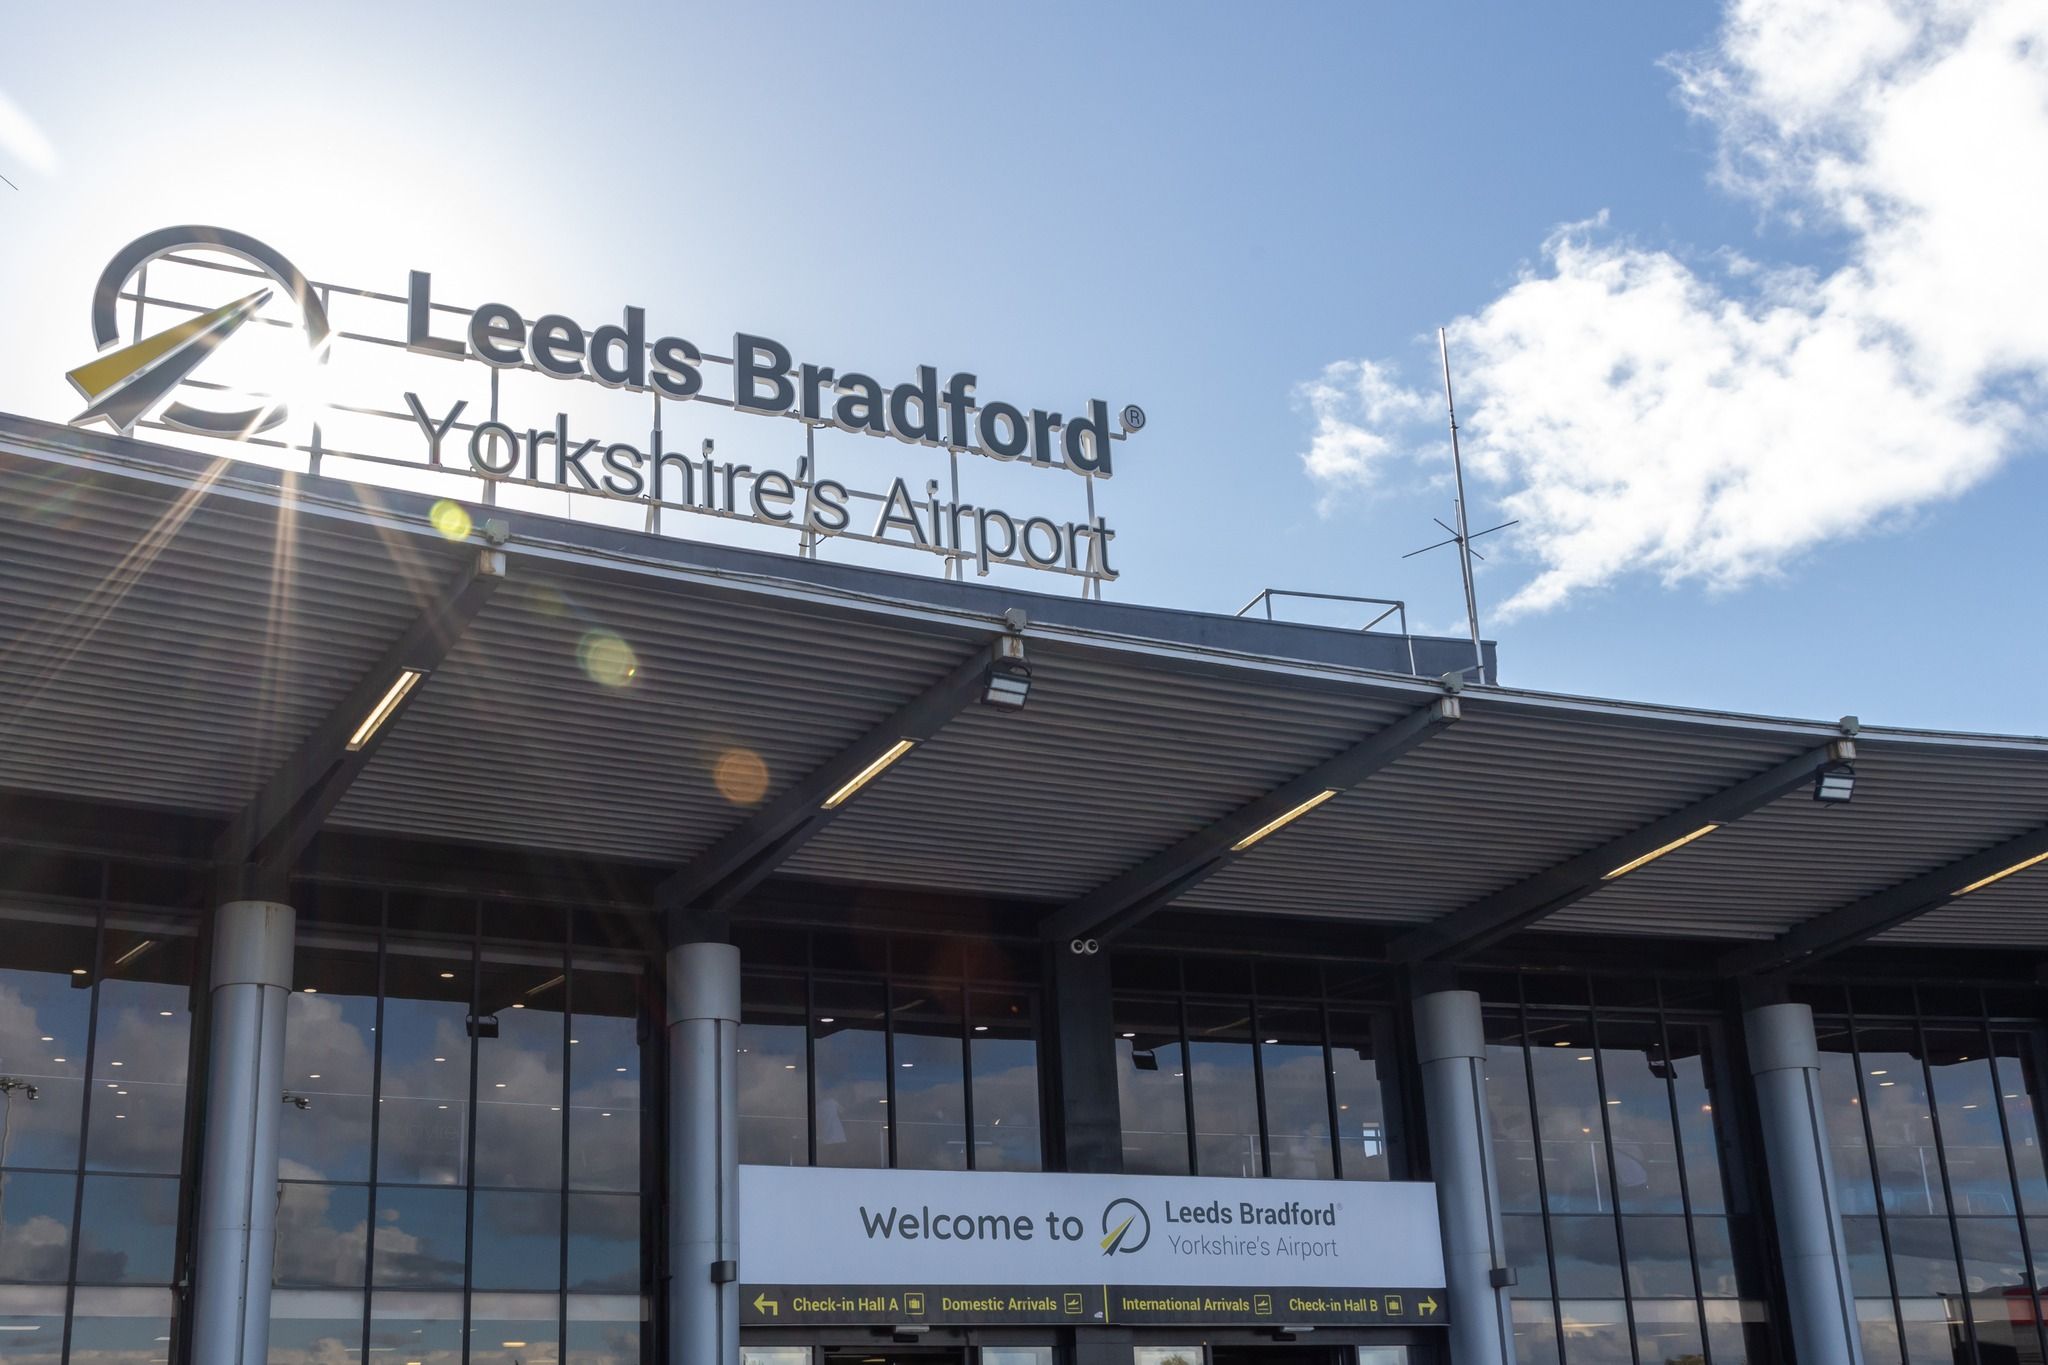 Leeds Bradford Airport in Yorkshire